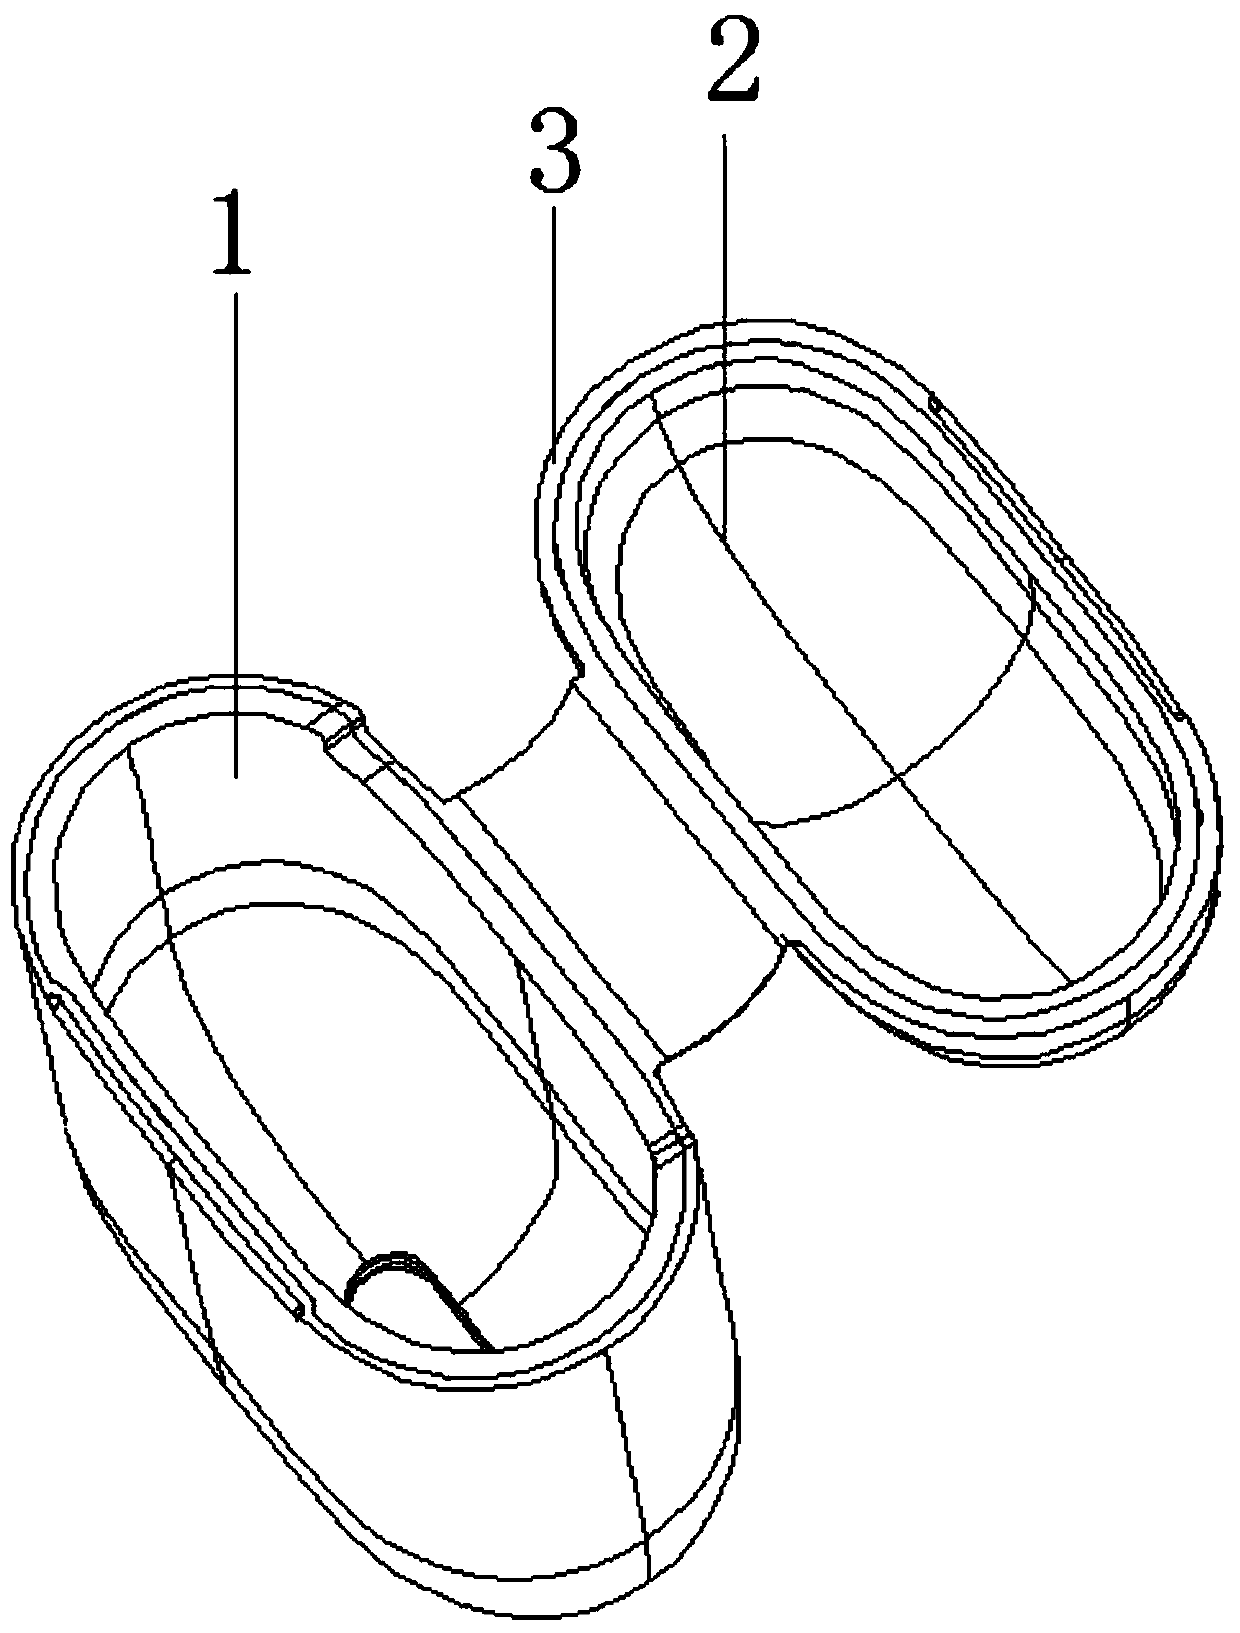 Novel protective sleeve of Bluetooth earphone box